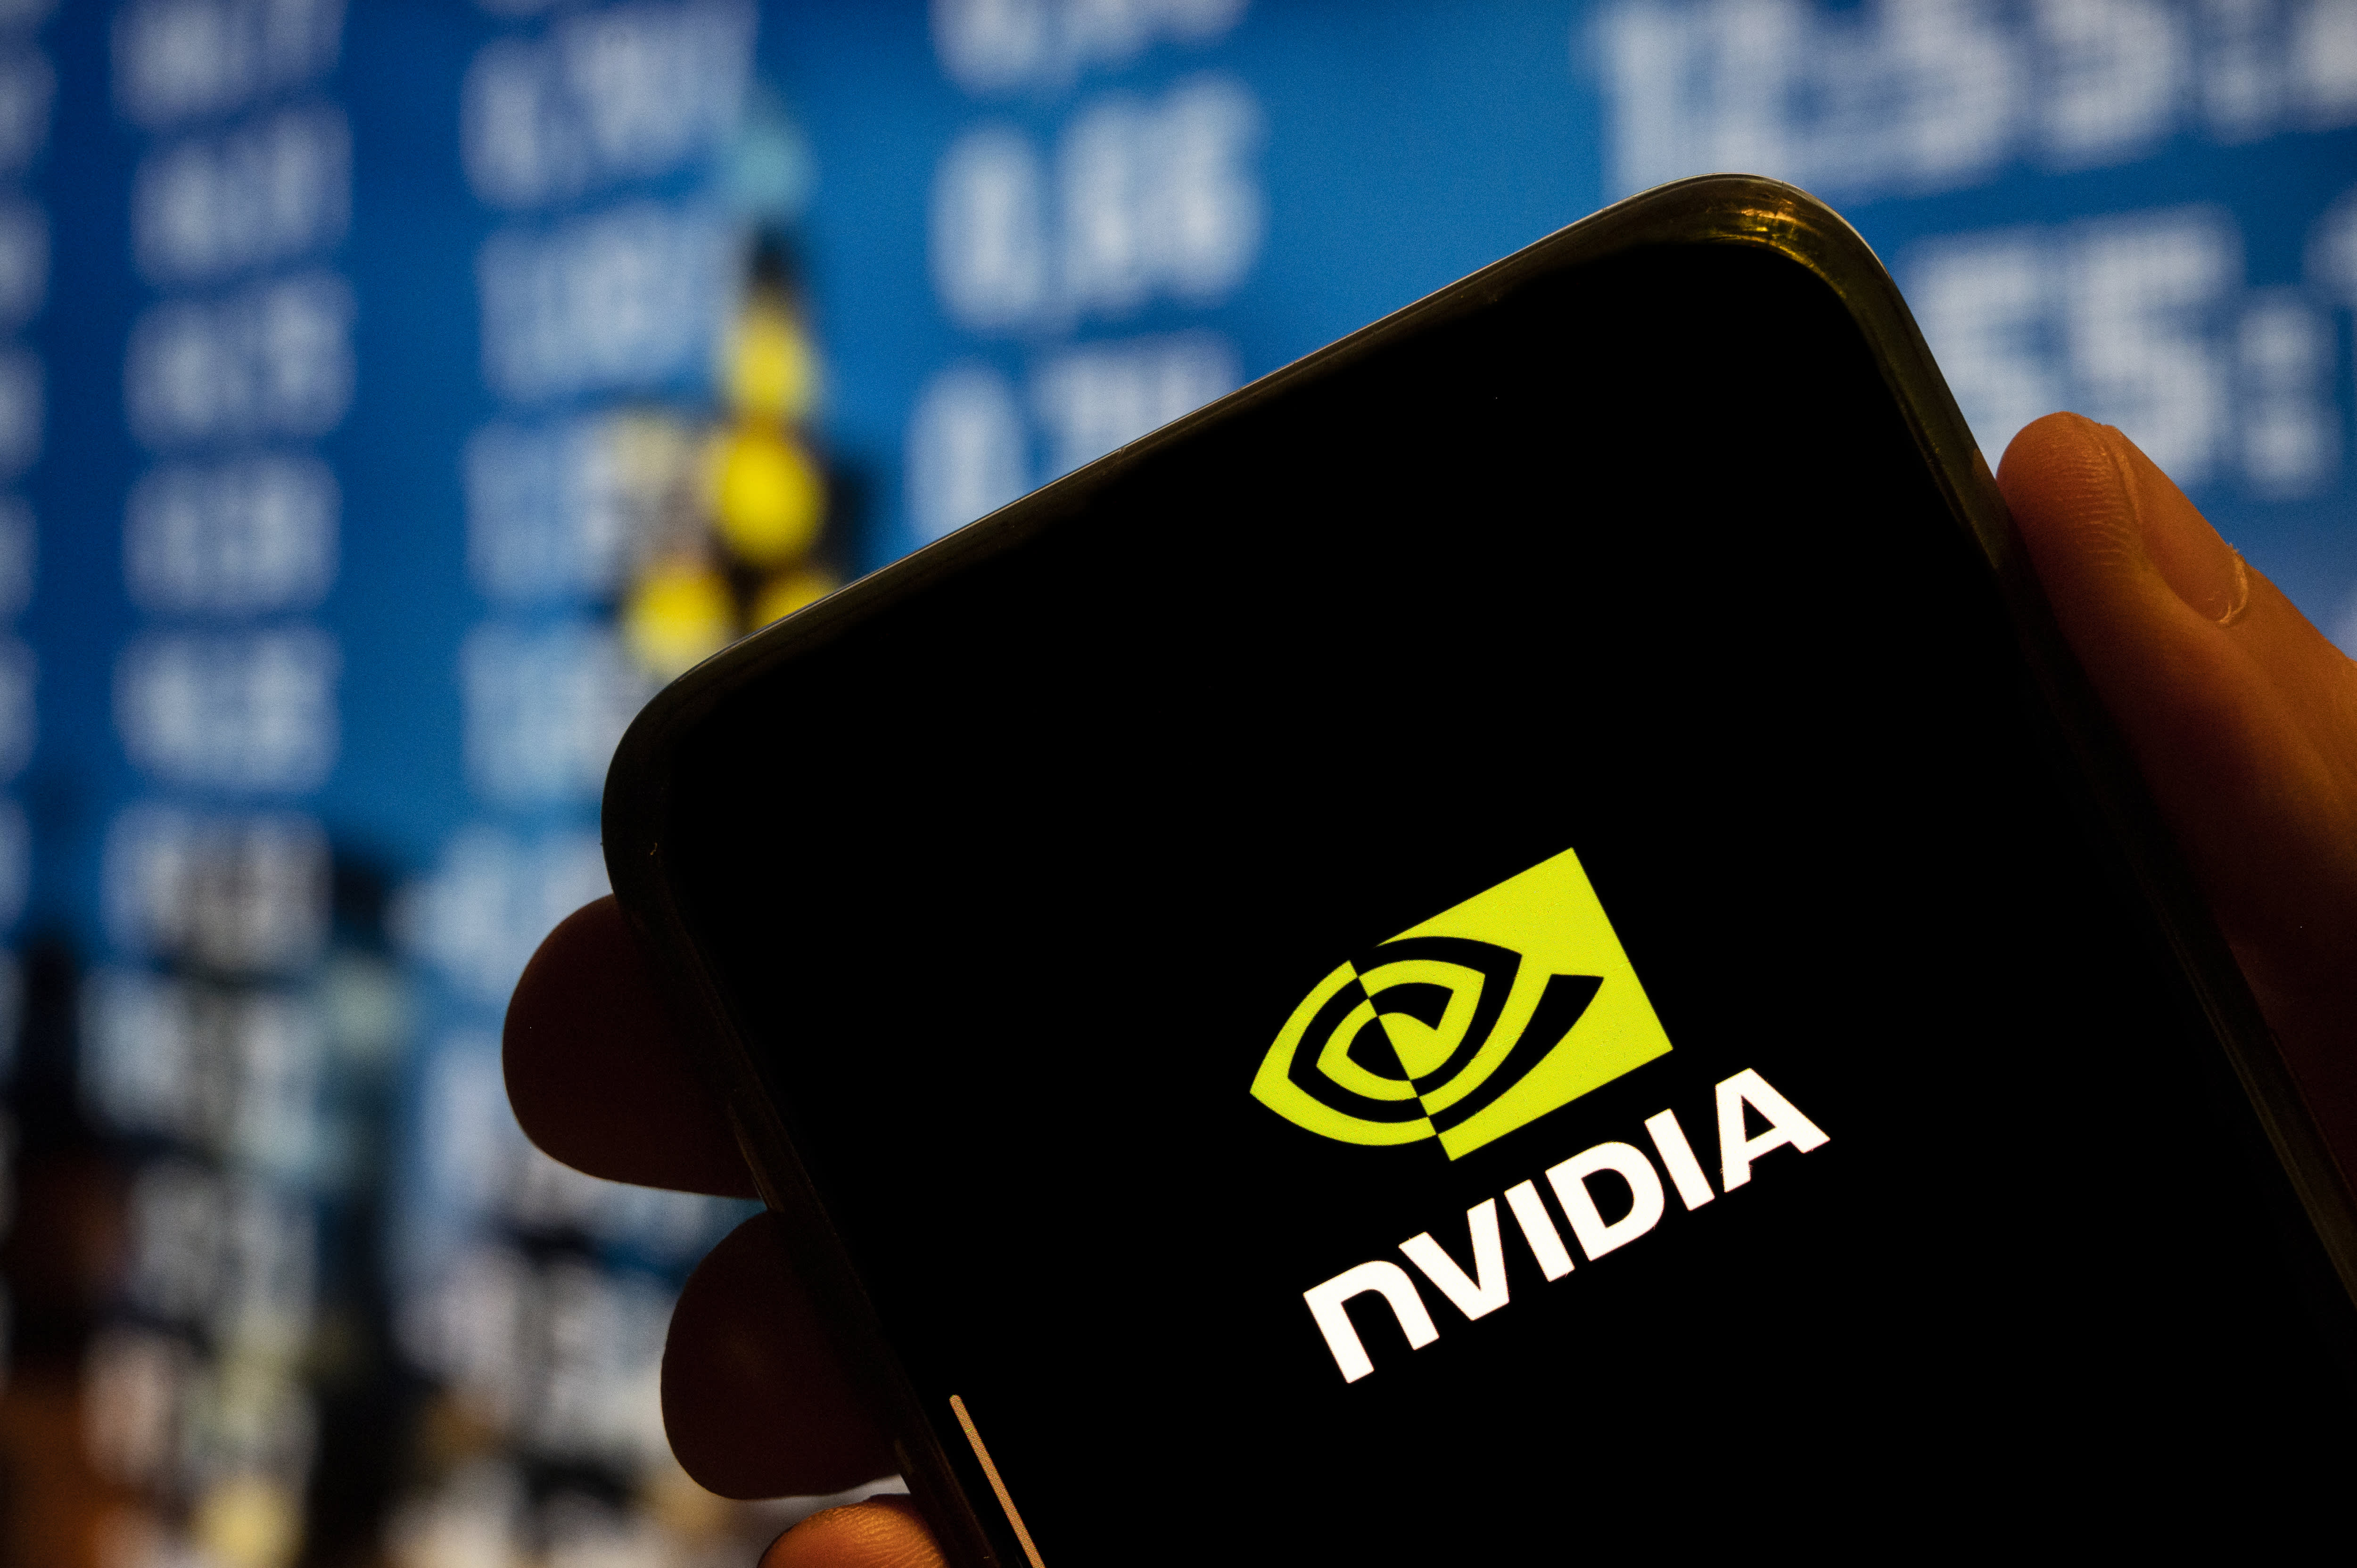 Daiwa downgrades Nvidia, says valuation is still too high given the weak economy